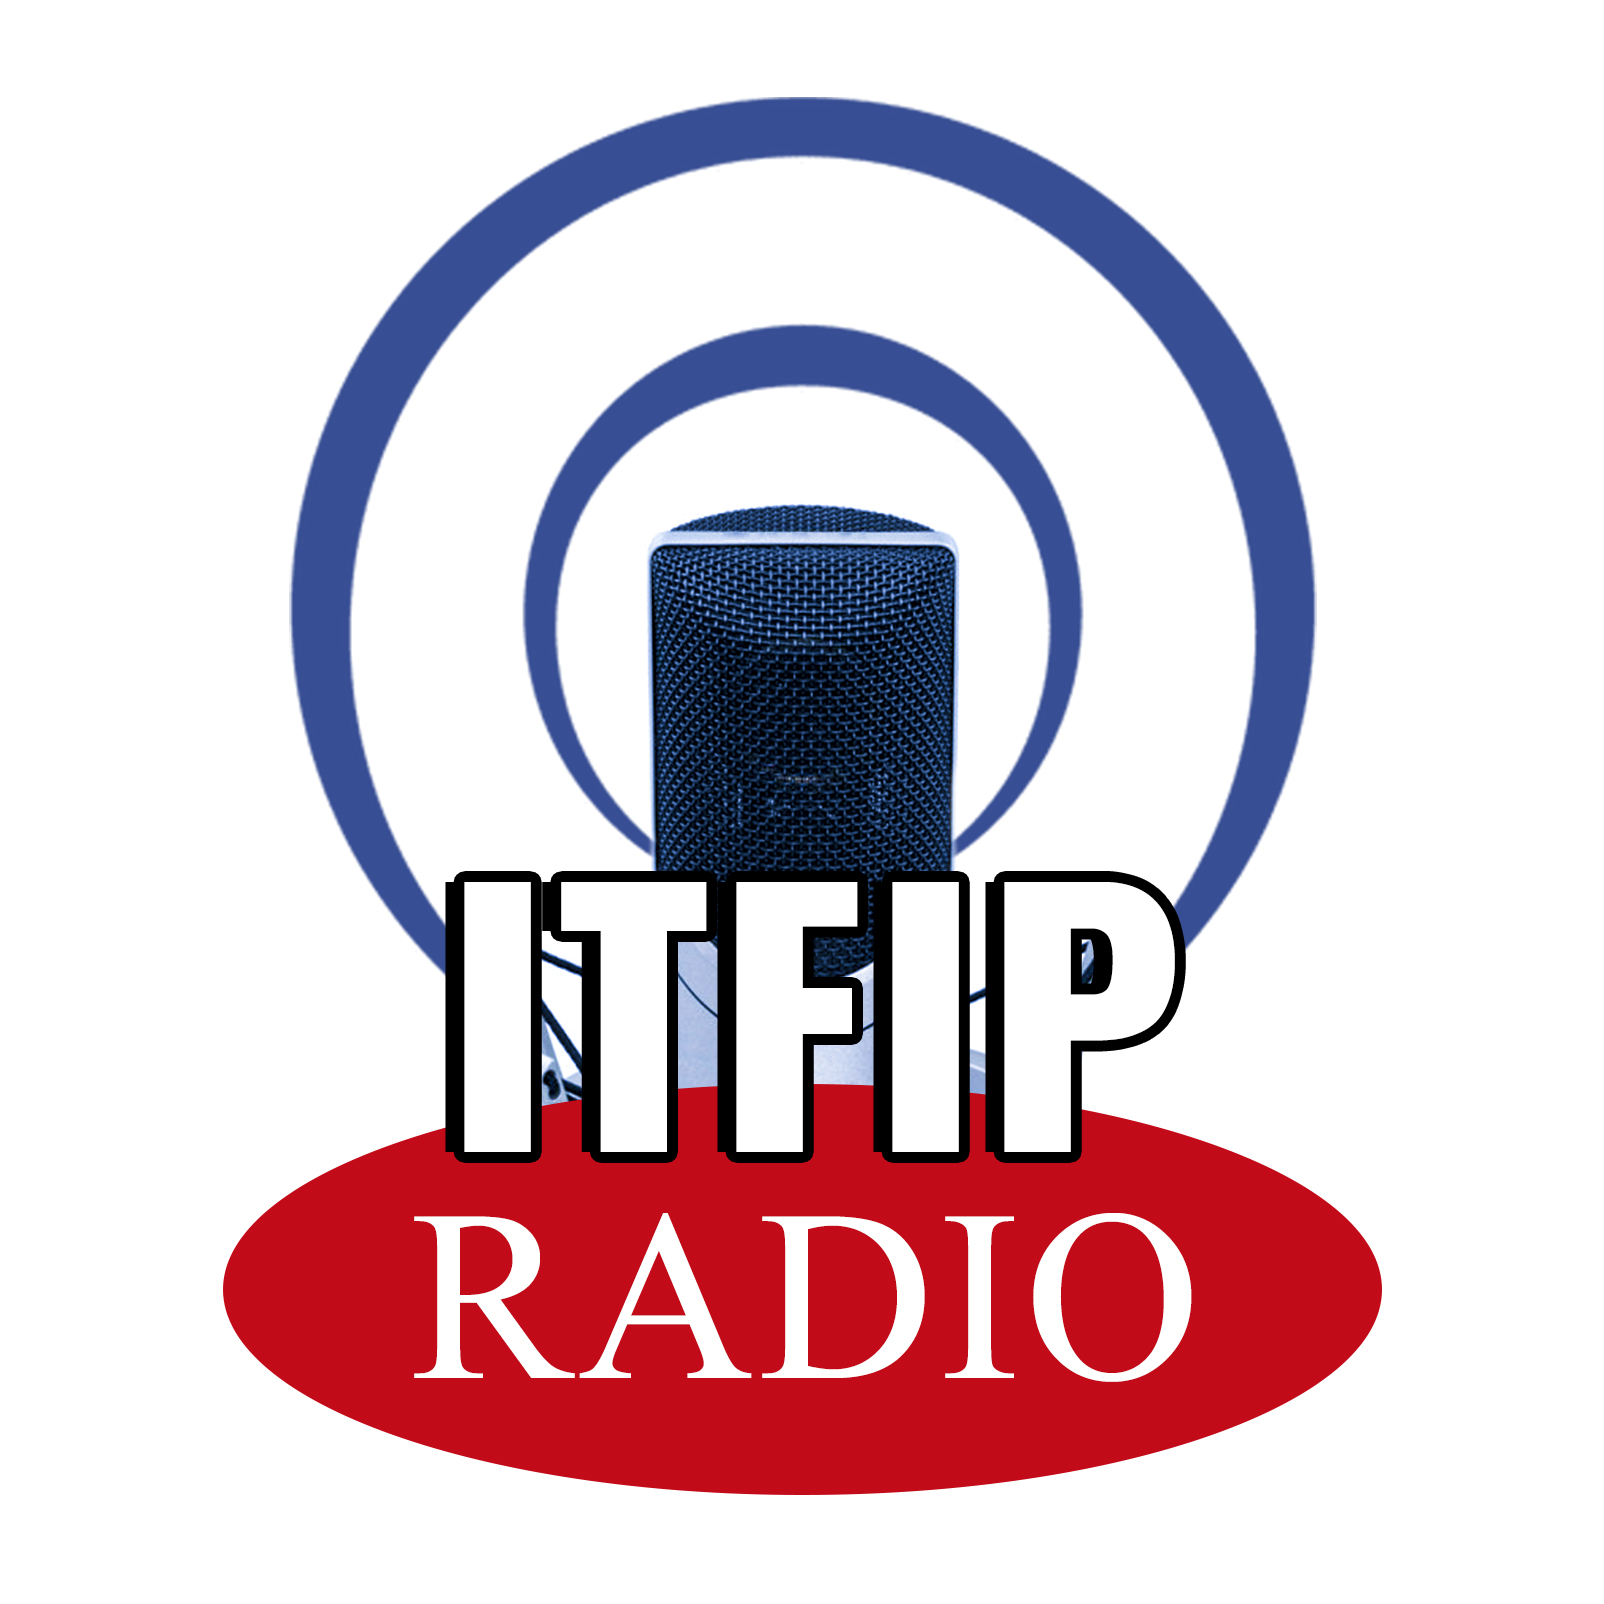 ITFIP RADIO